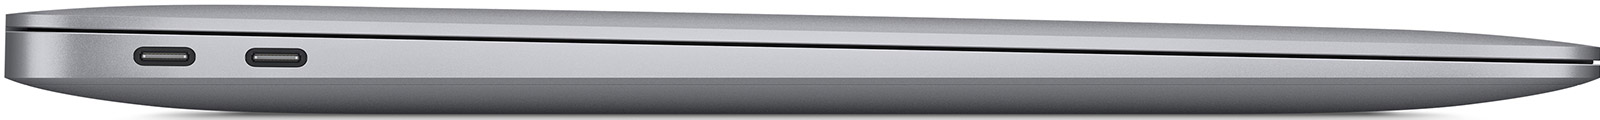 Apple-MacBook-Air-13-3-M1-8-Core-8-GB-512-GB-8-Core-Grafik-Space-Grau-US-Amer-05.jpg